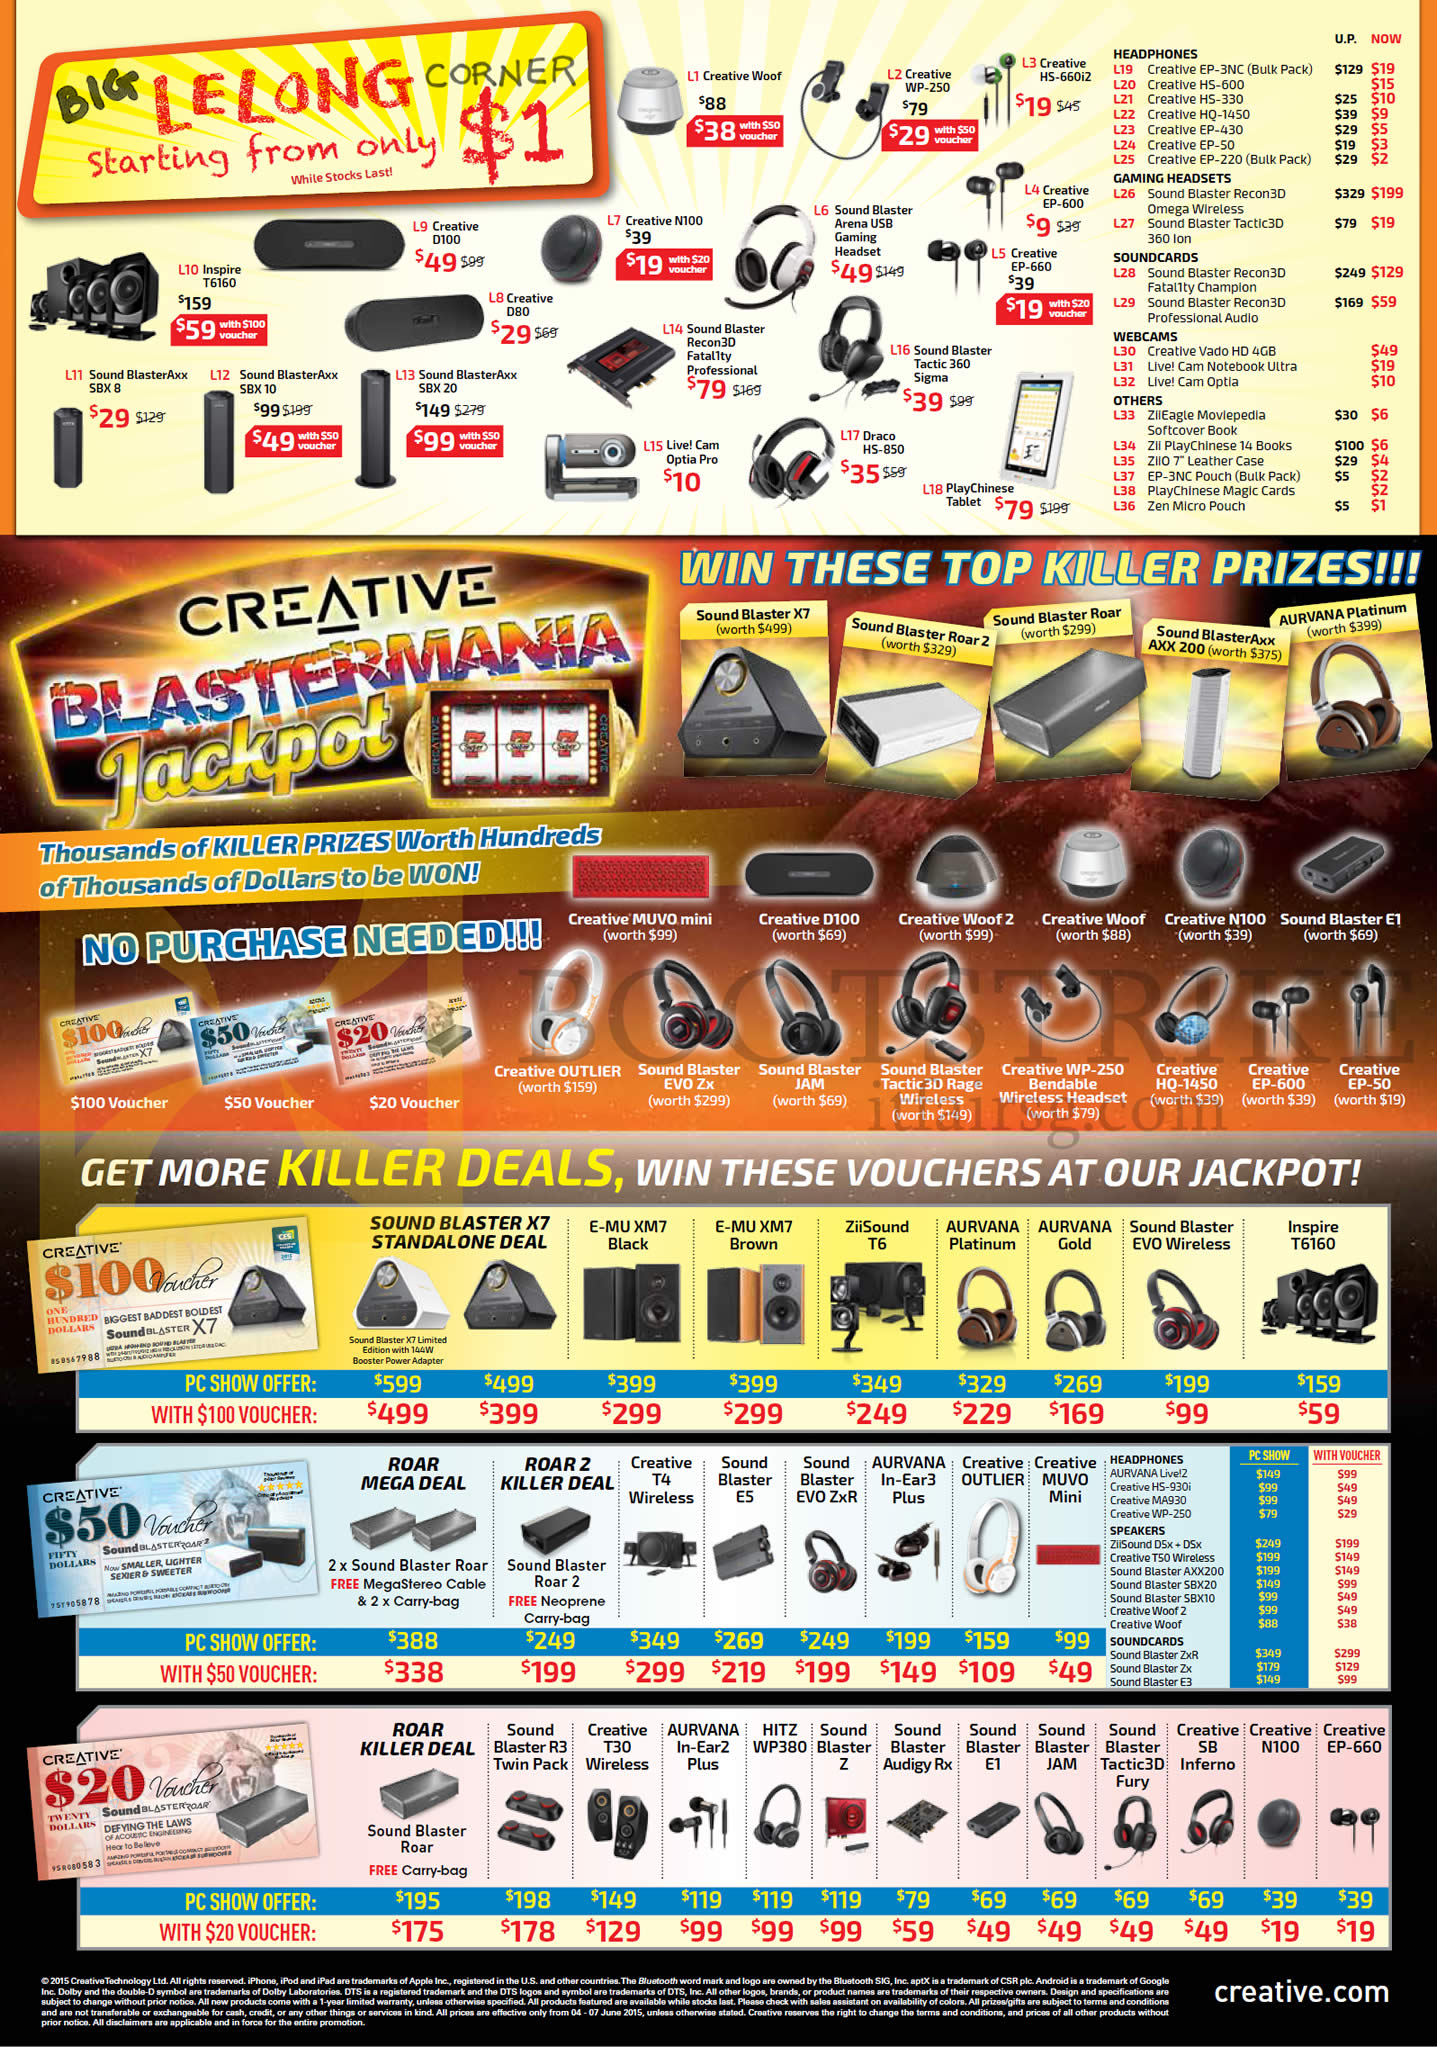 PC SHOW 2015 price list image brochure of Creative Killer Deals, Free Vouchers, Headsets, Headphones, Webcams, Speakers, Sound Cards, Blaster, Inspire, Recon3D, Arena, Woof, Live, Tactic